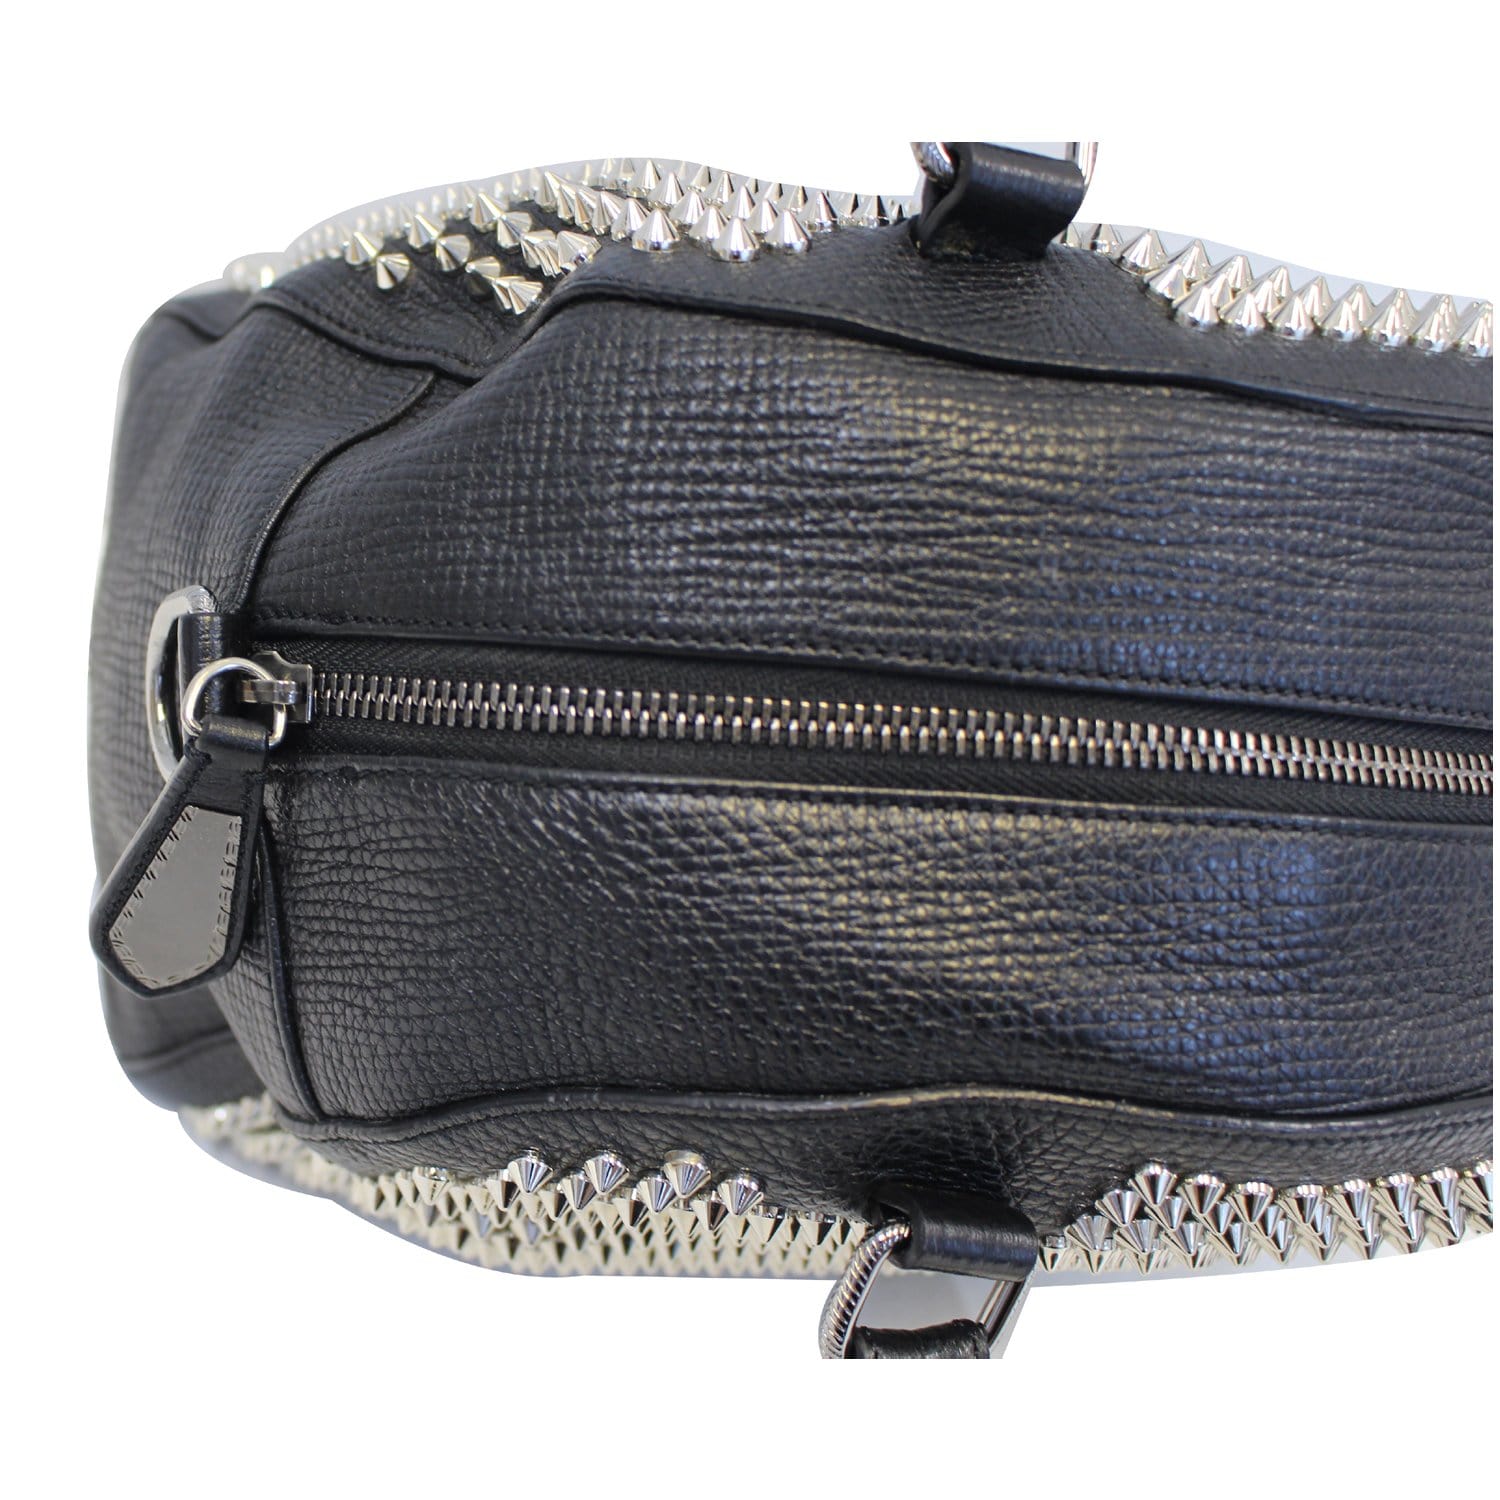 CHRISTIAN LOUBOUTIN Panettone Spike Stud Leather Satchel Bag Black-US